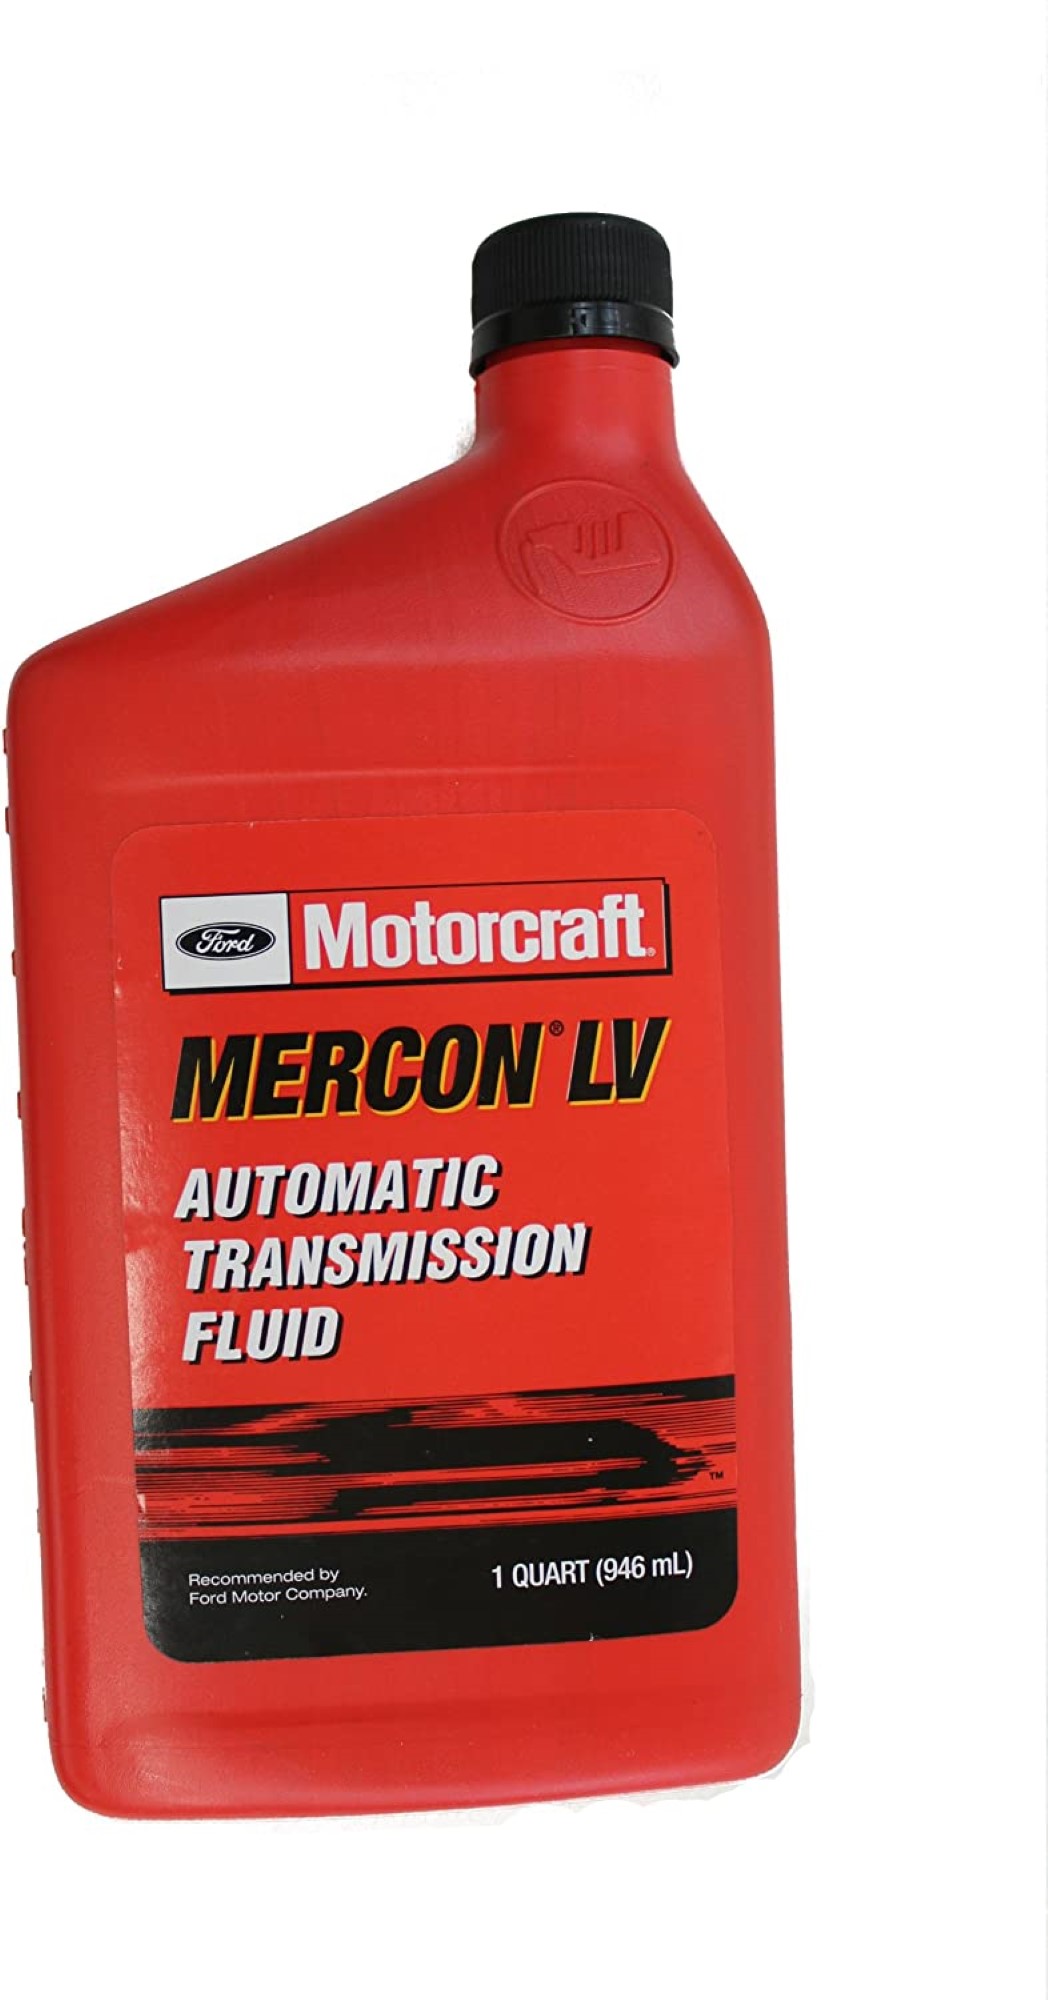 MOTORCRAFT MERCON LV AUTOMATIC TRANSMISSION FLUID - XT-10-QLVC -6 UNITS  (QUART)